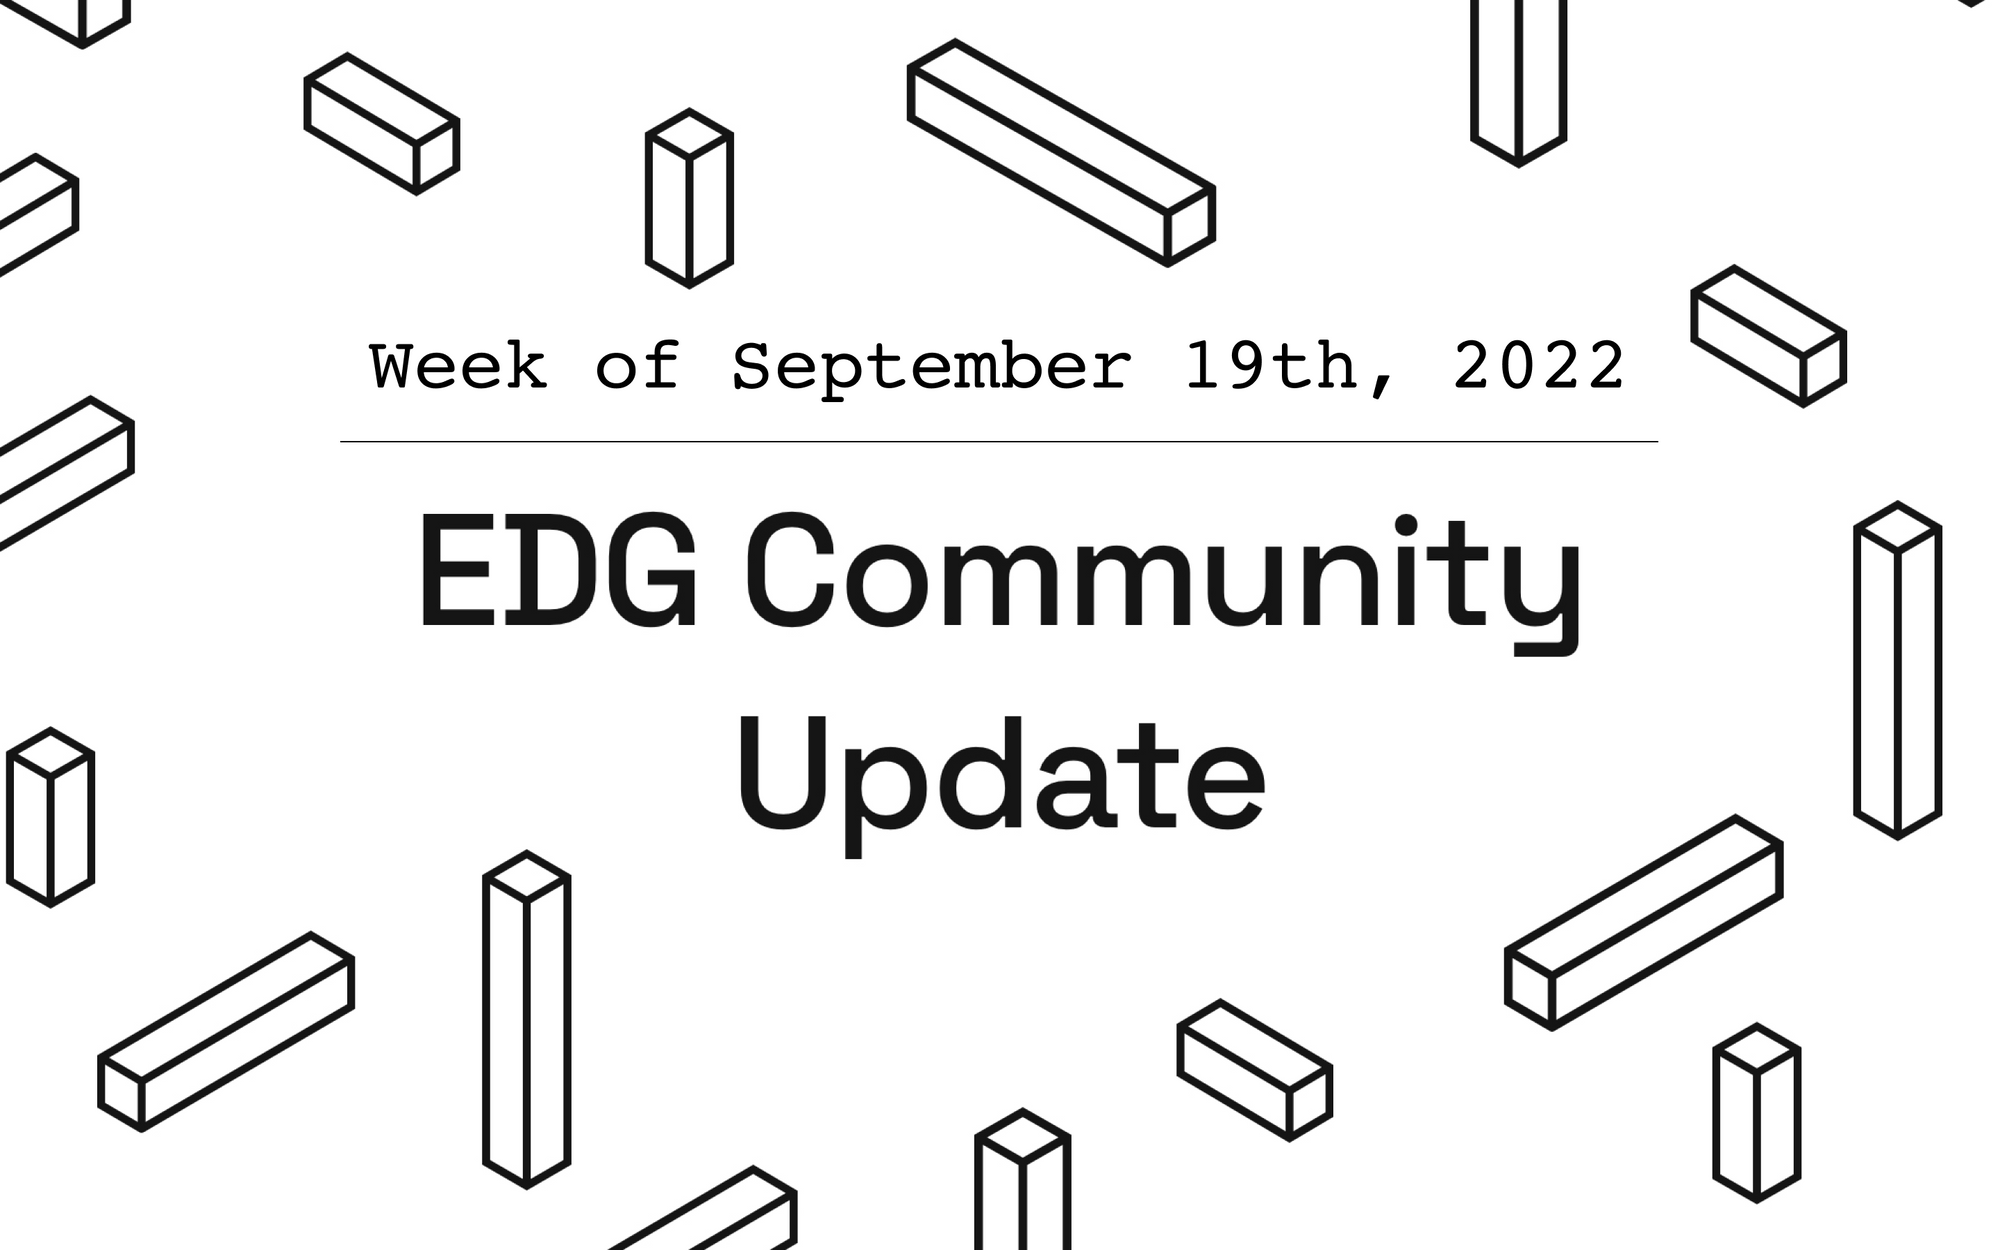 EDG Community Update: Week of September 19th, 2022